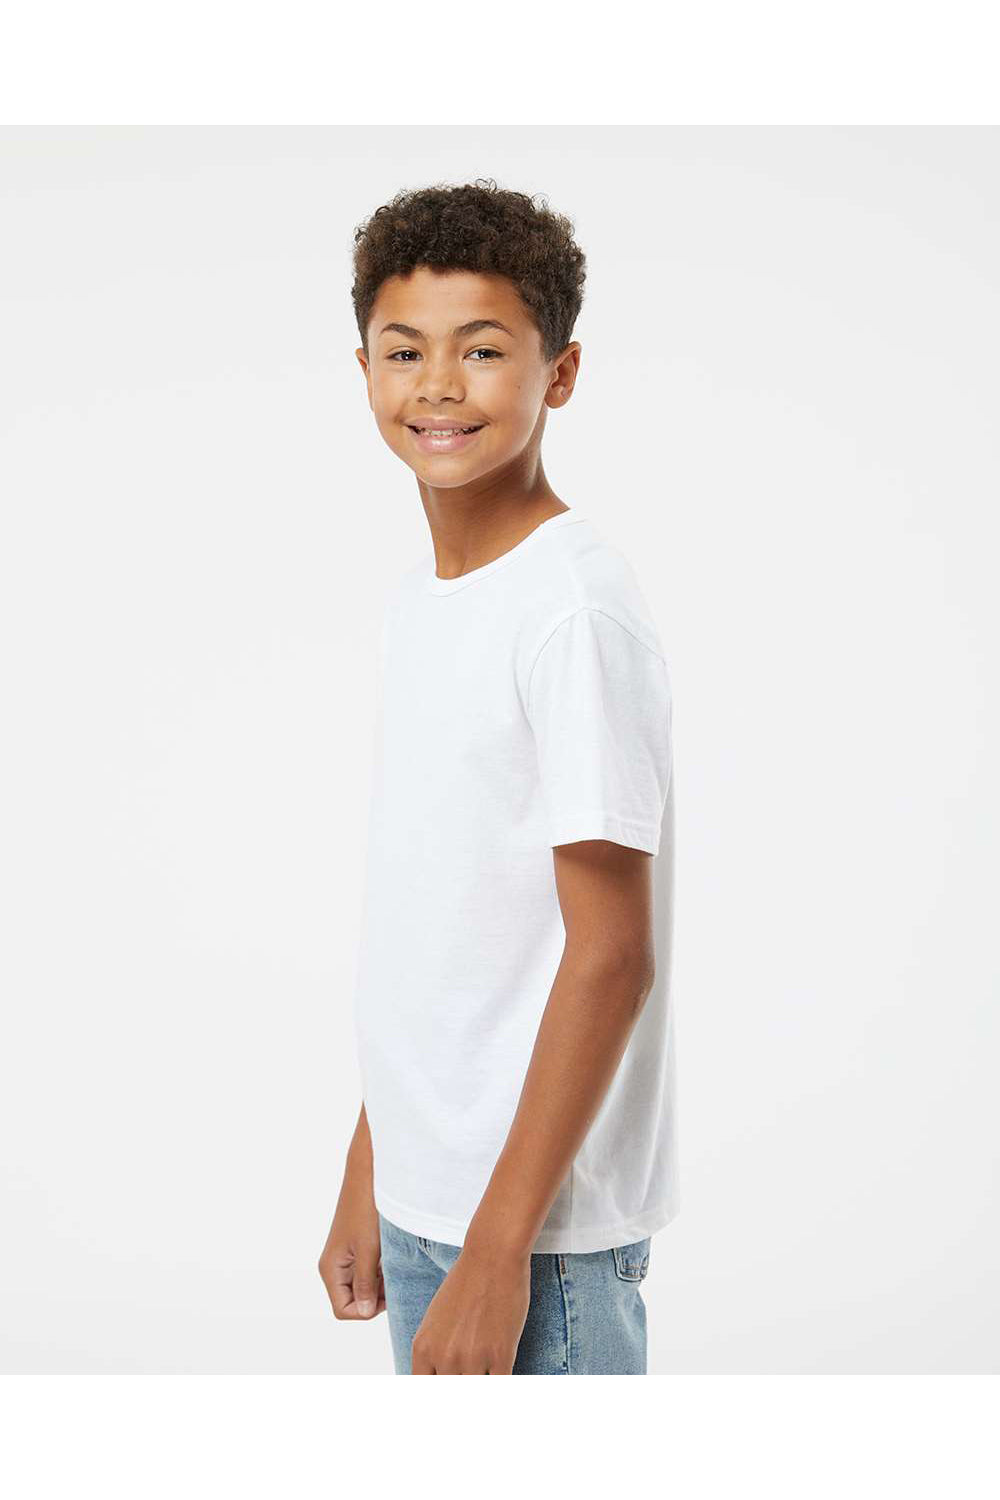 Kastlfel 2015 Youth RecycledSoft Short Sleeve Crewneck T-Shirt White Model Side